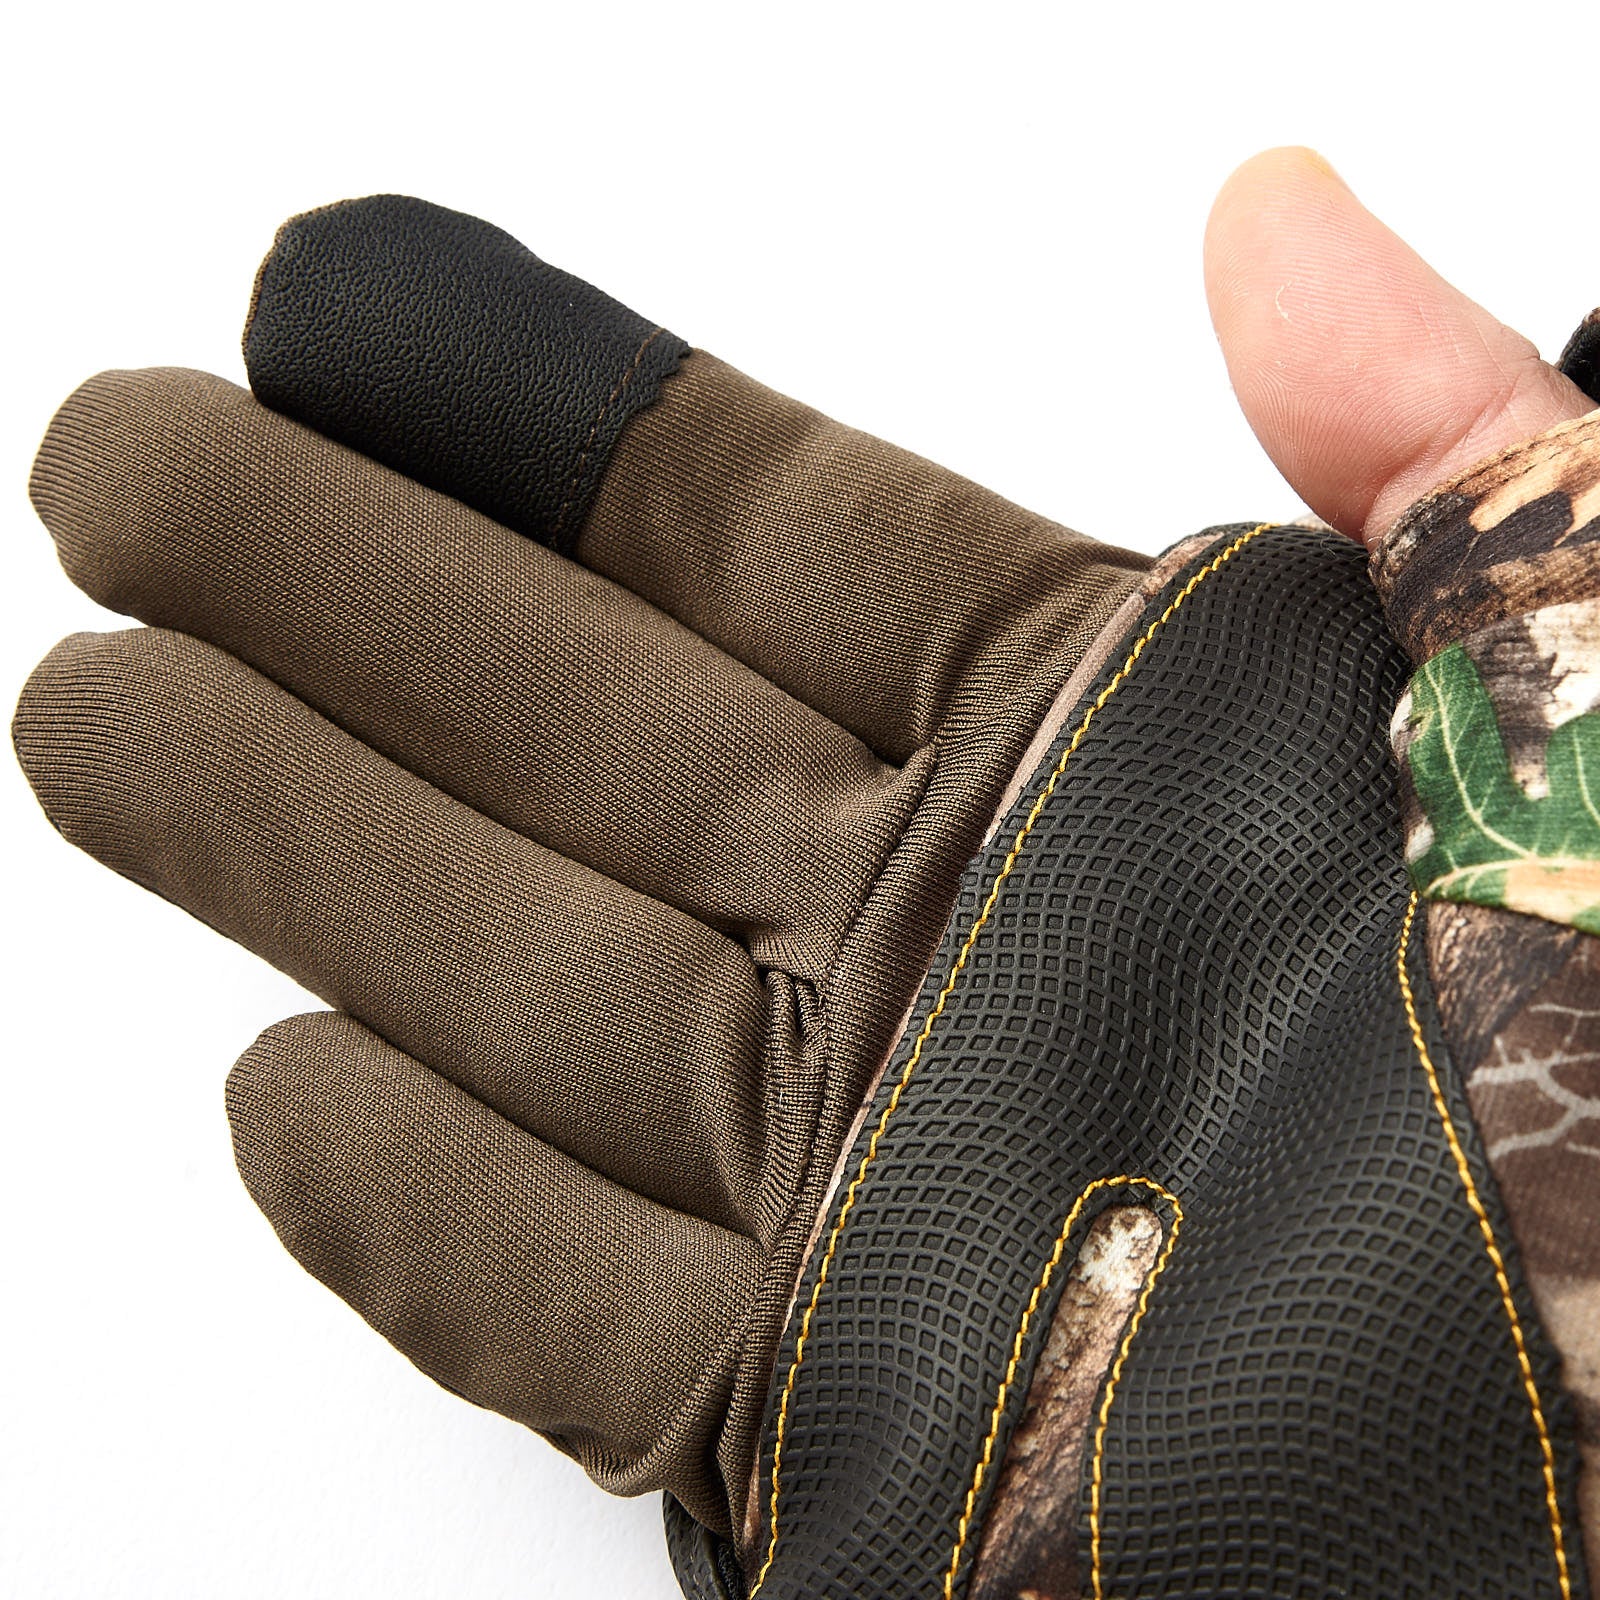 Heat glove 1.0 finger cap hunting mittens